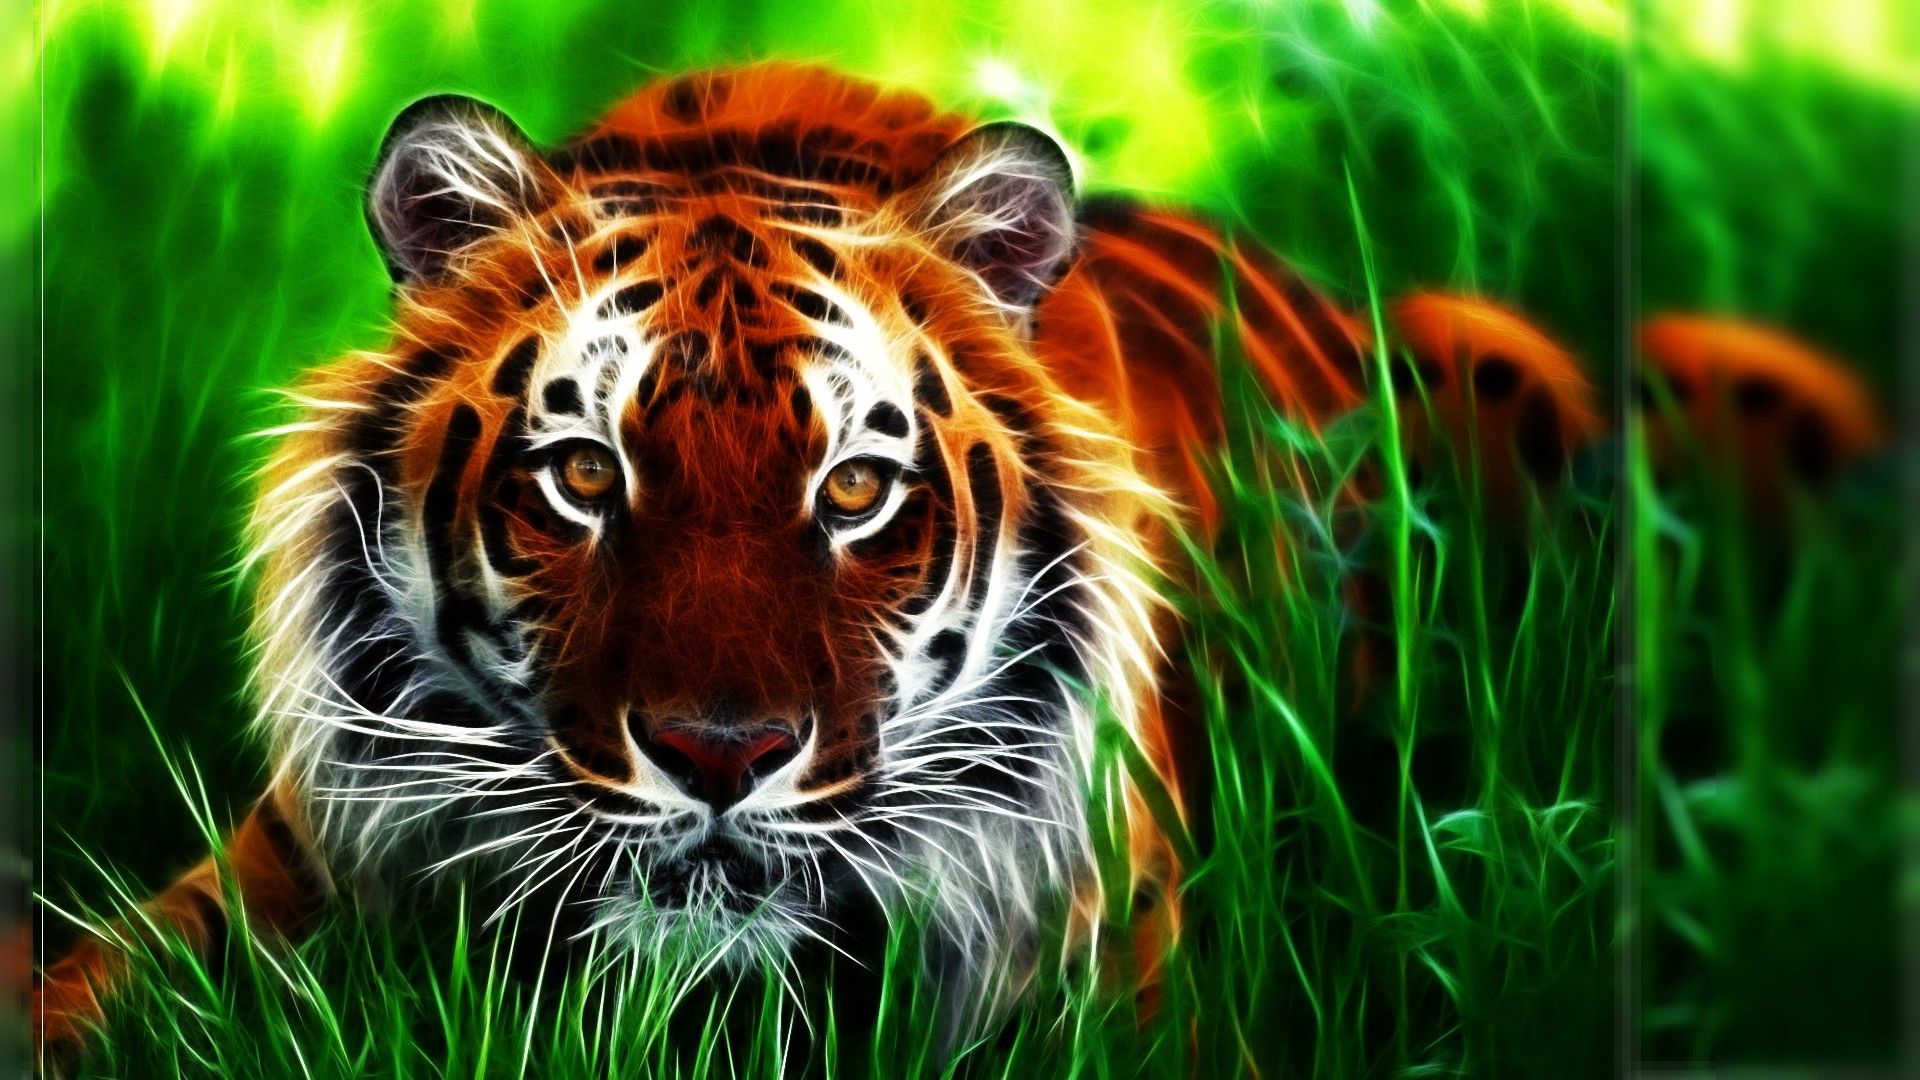 Tiger 3D Wallpaper - Wallpapers High Definition